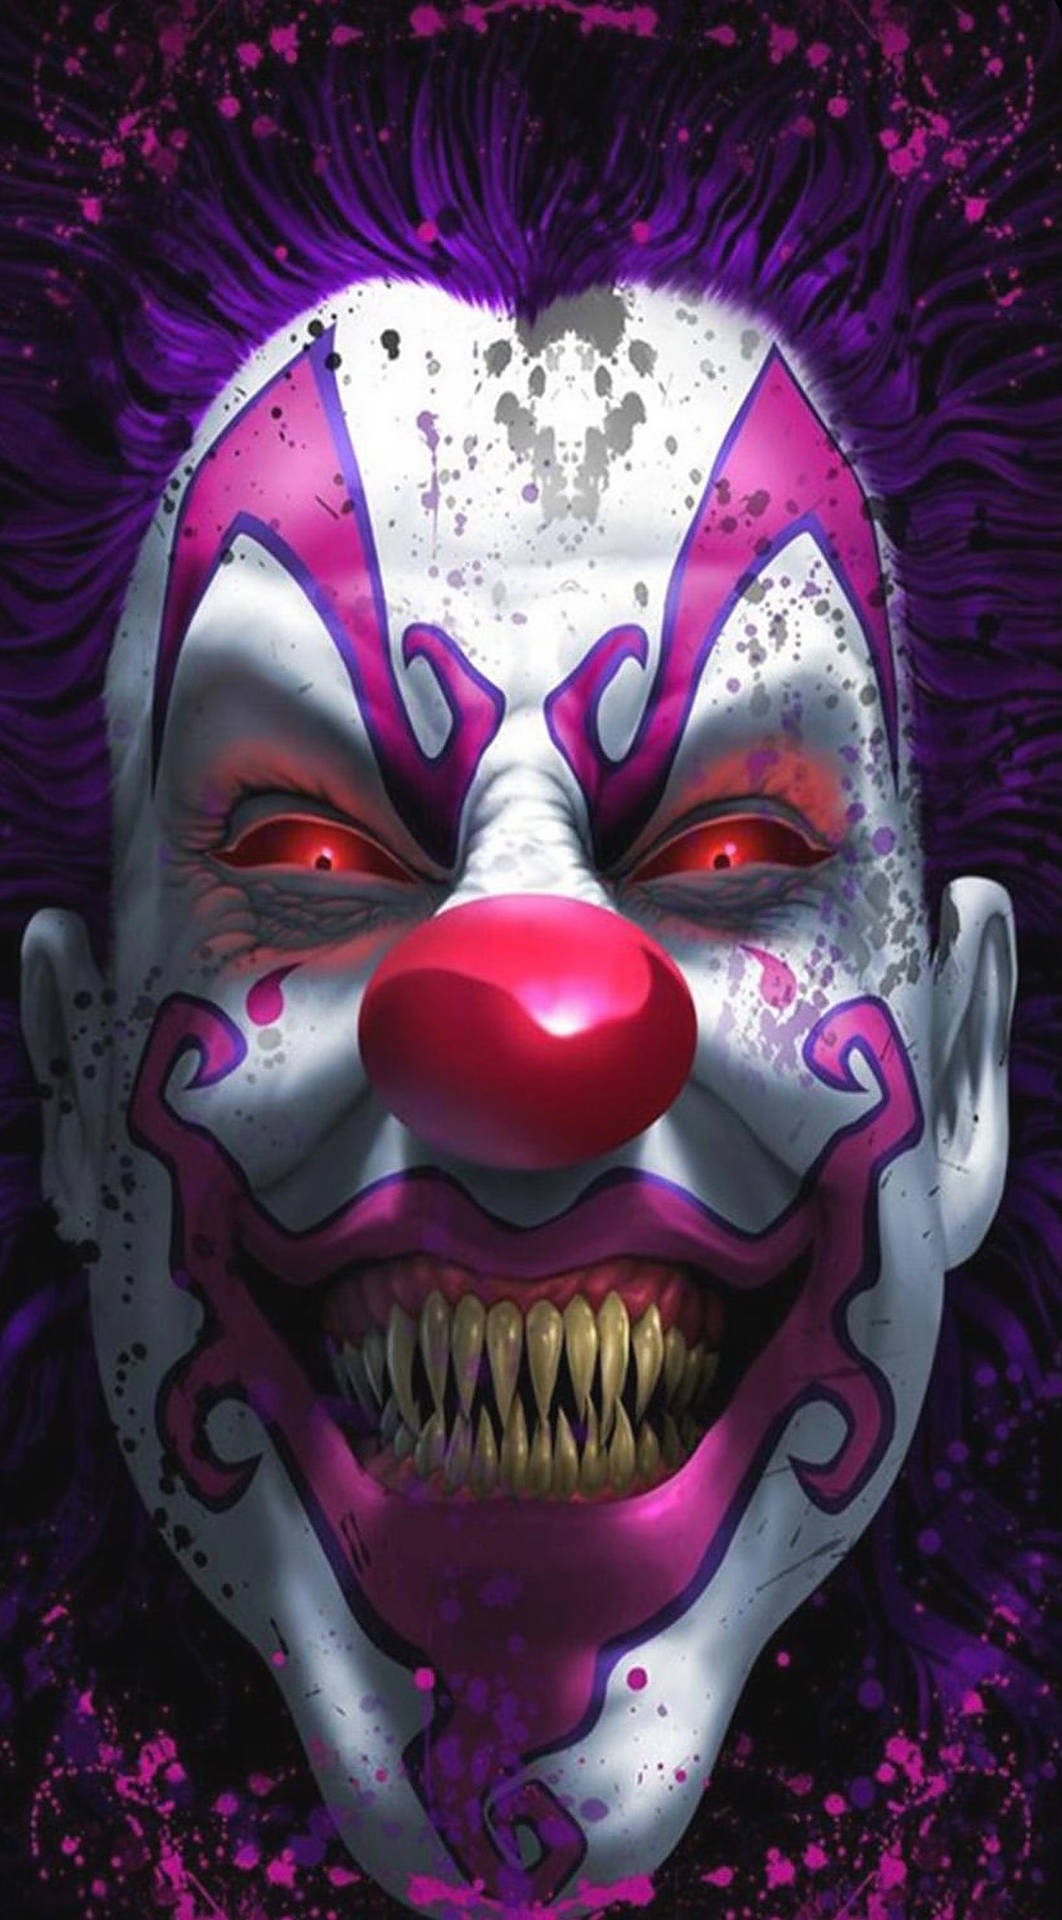 Purple Clown Close-Up Wallpaper